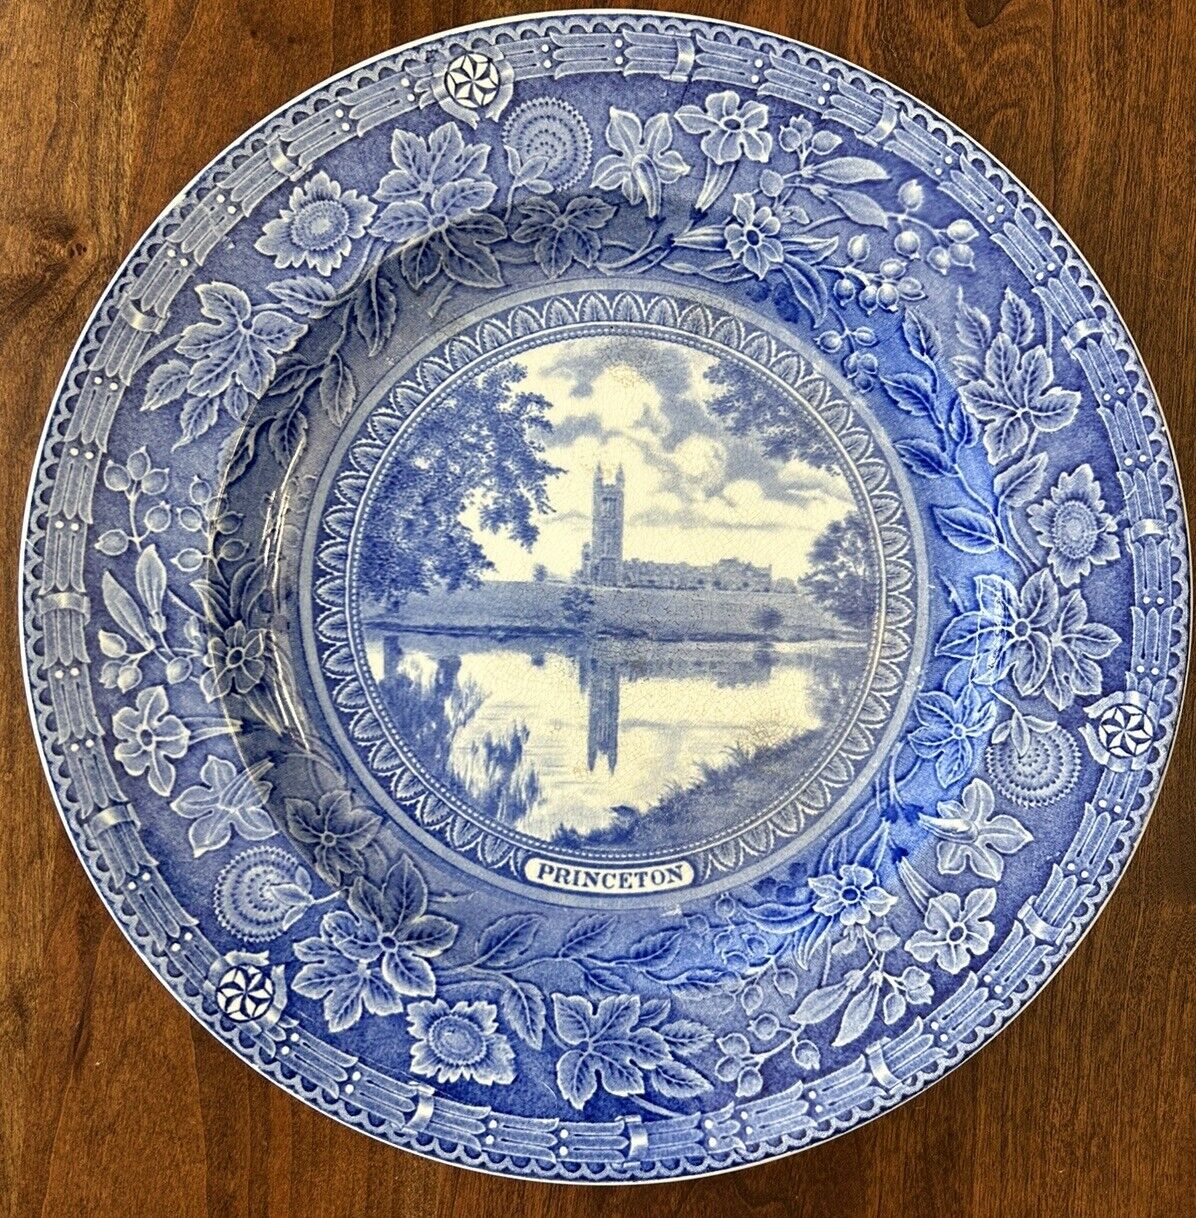 VTG 1930 Princeton Plate, Graduate college, Dinner Plate (has Damage)